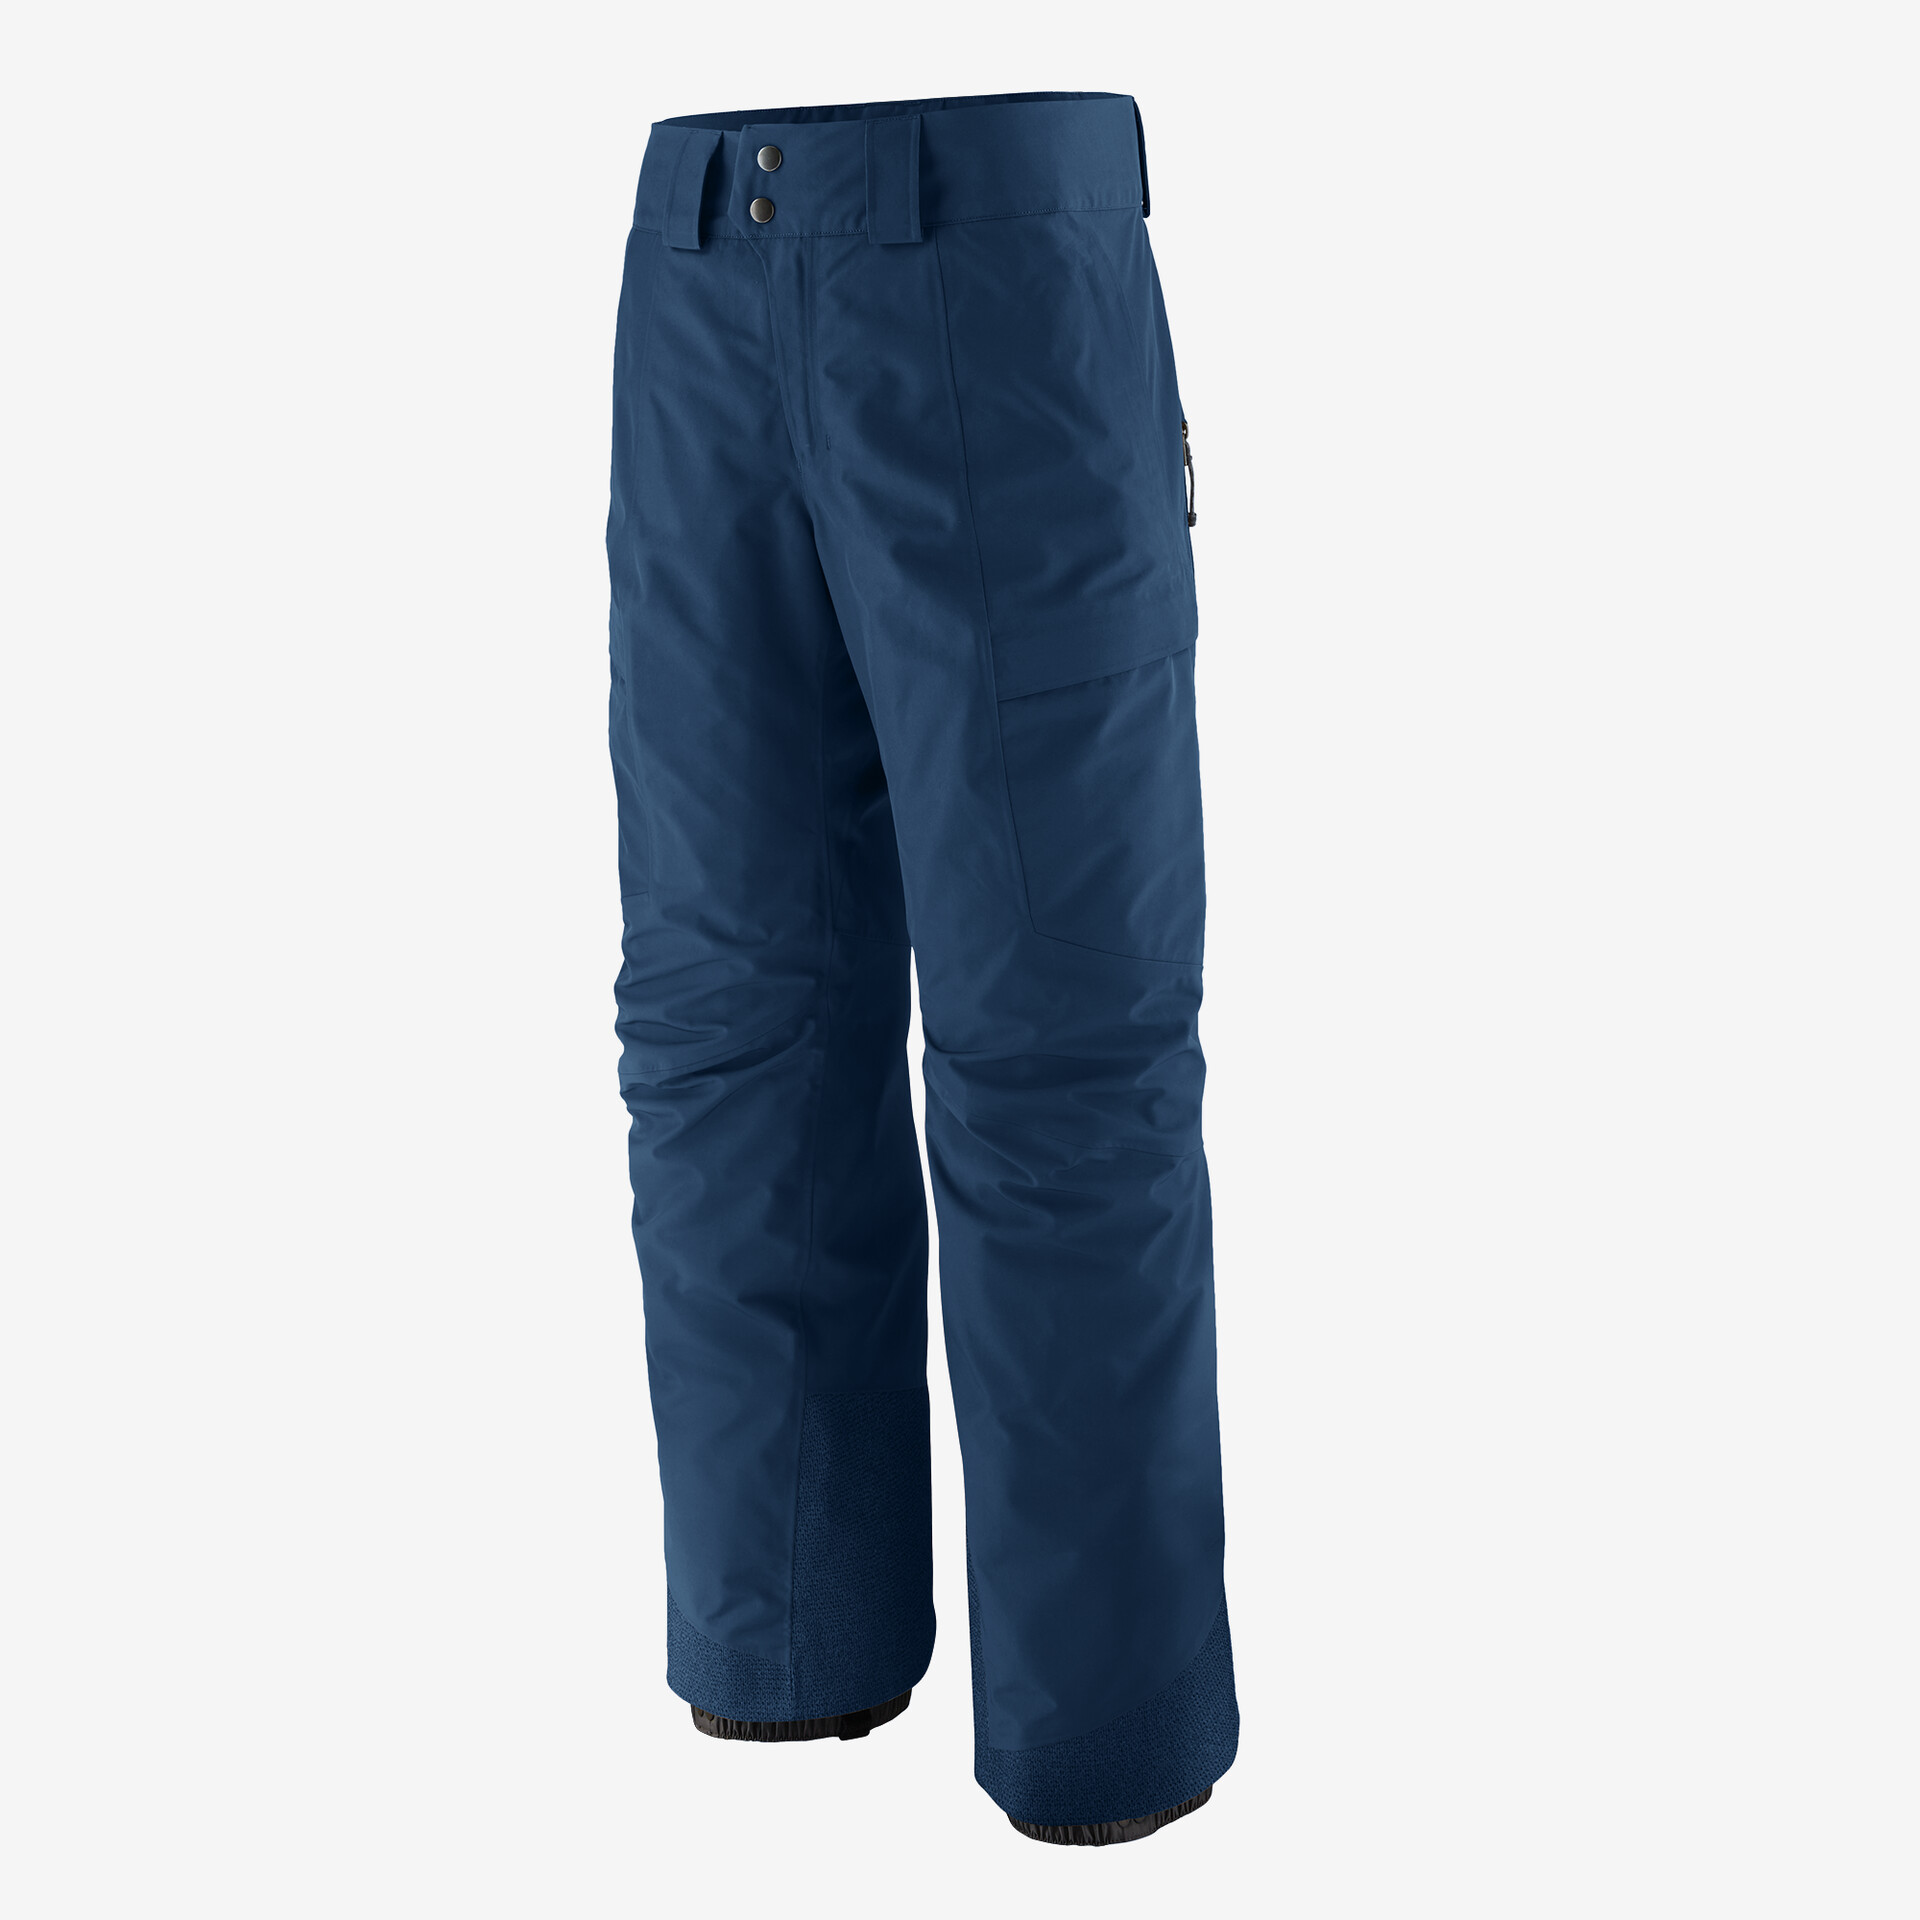 Мужские брюки Storm Shift Patagonia, лагом синий